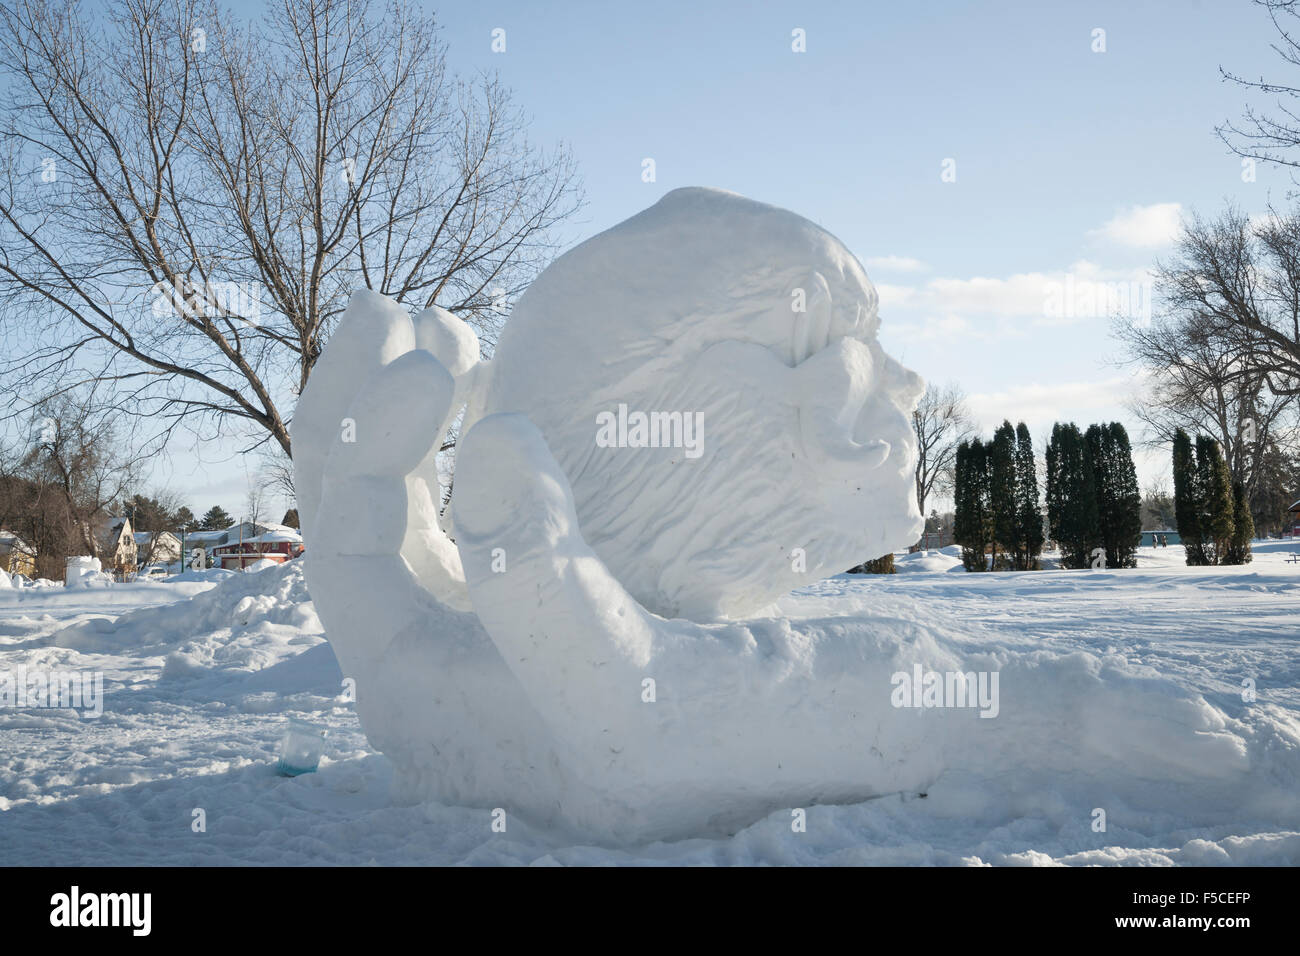 Scultura di neve di una testa in una curva a mano l'inverno le vie festival in Ely, MN, Stati Uniti d'America Foto Stock